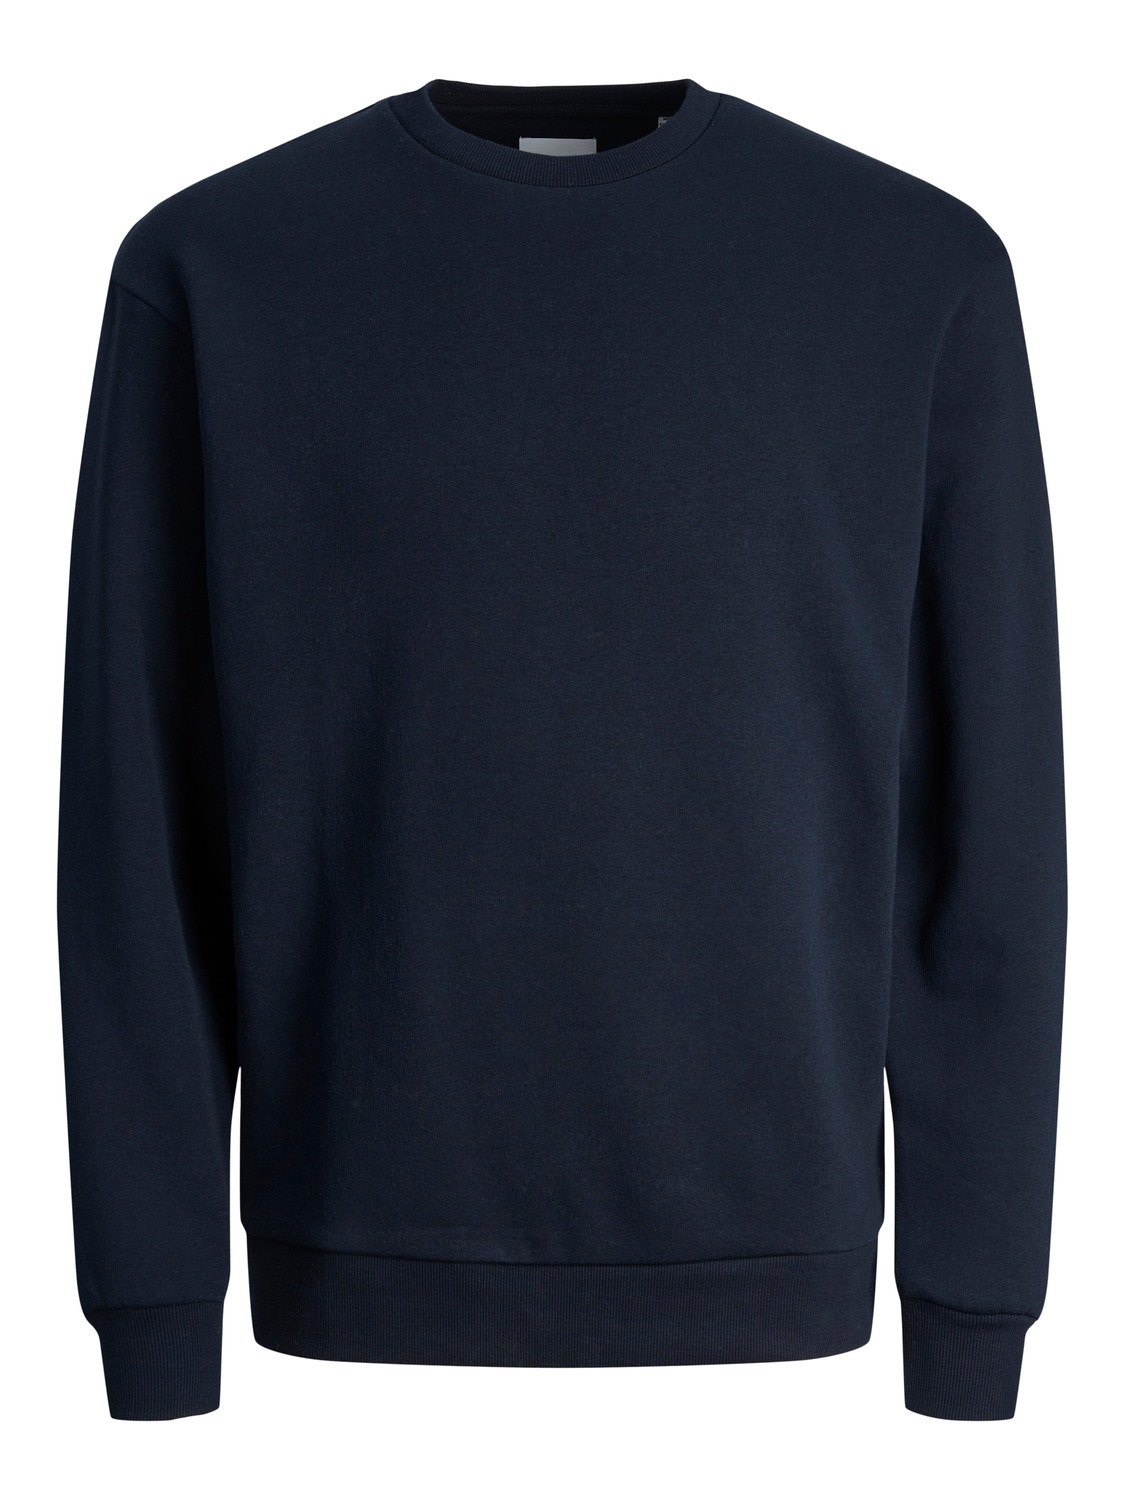 Jack & Jones Plain Crewn Neck Sweatshirt -Navy Blazer - 12249341